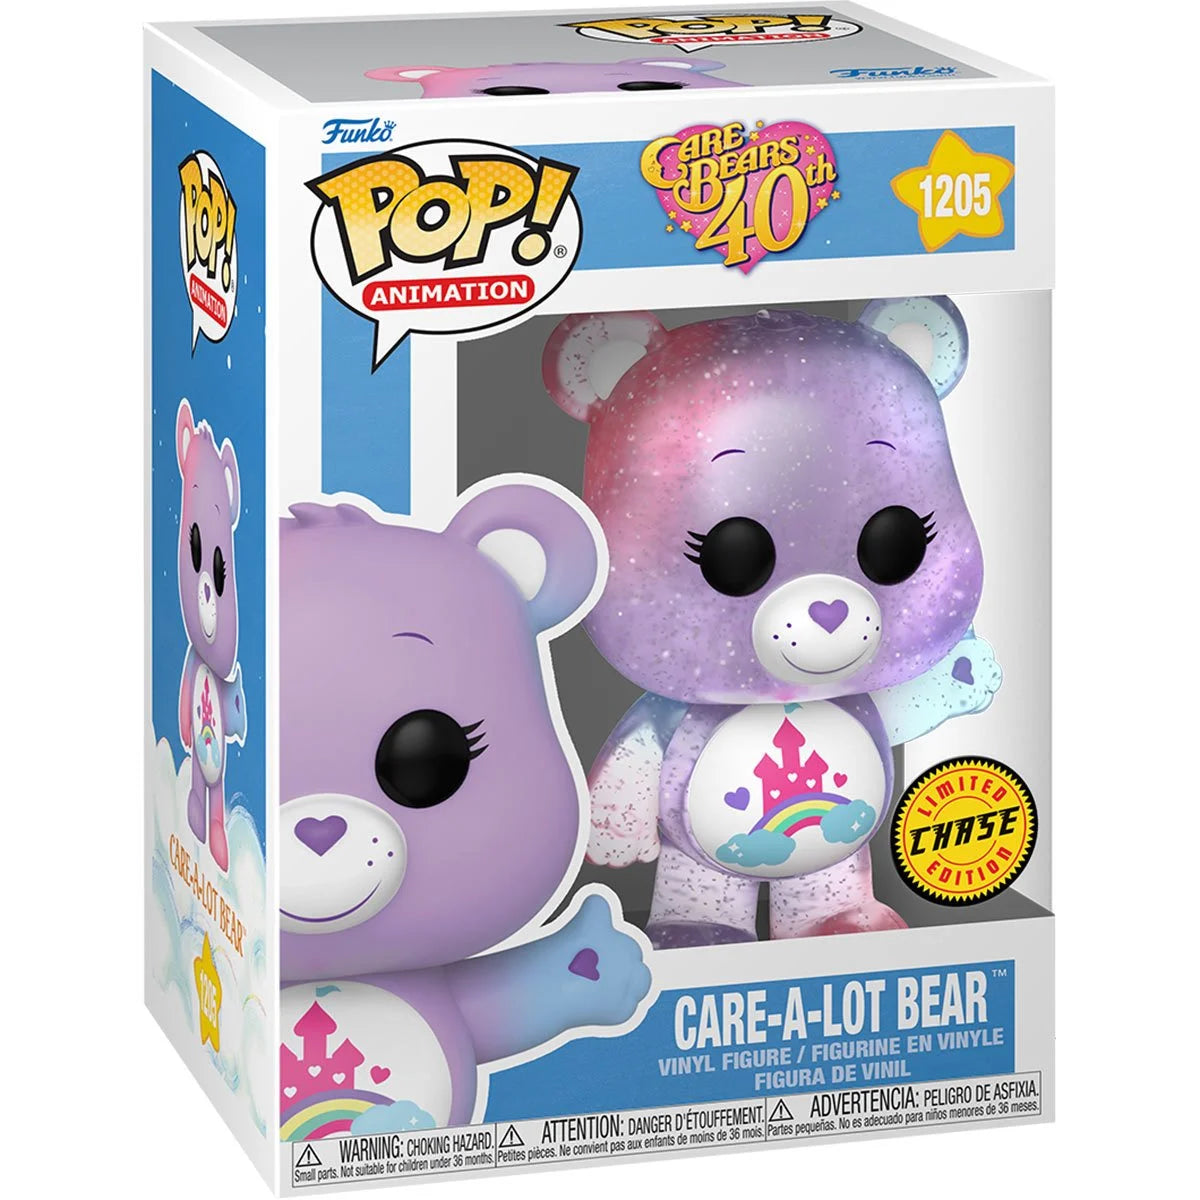 Care-a-Lot Bear Care Bears 40th Anniversary Pop! Vinyl Figure